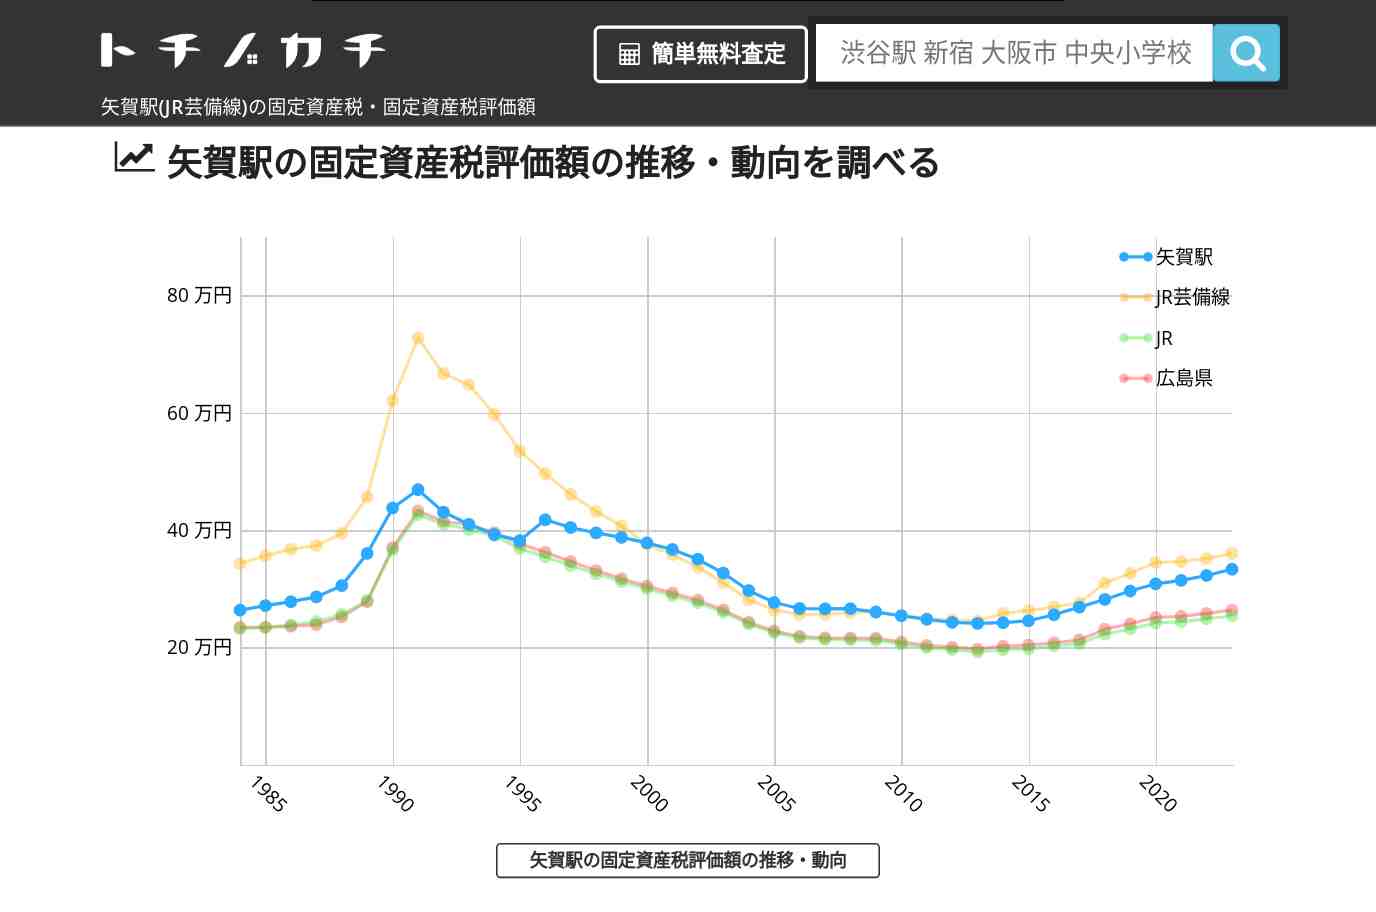 矢賀駅(JR芸備線)の固定資産税・固定資産税評価額 | トチノカチ